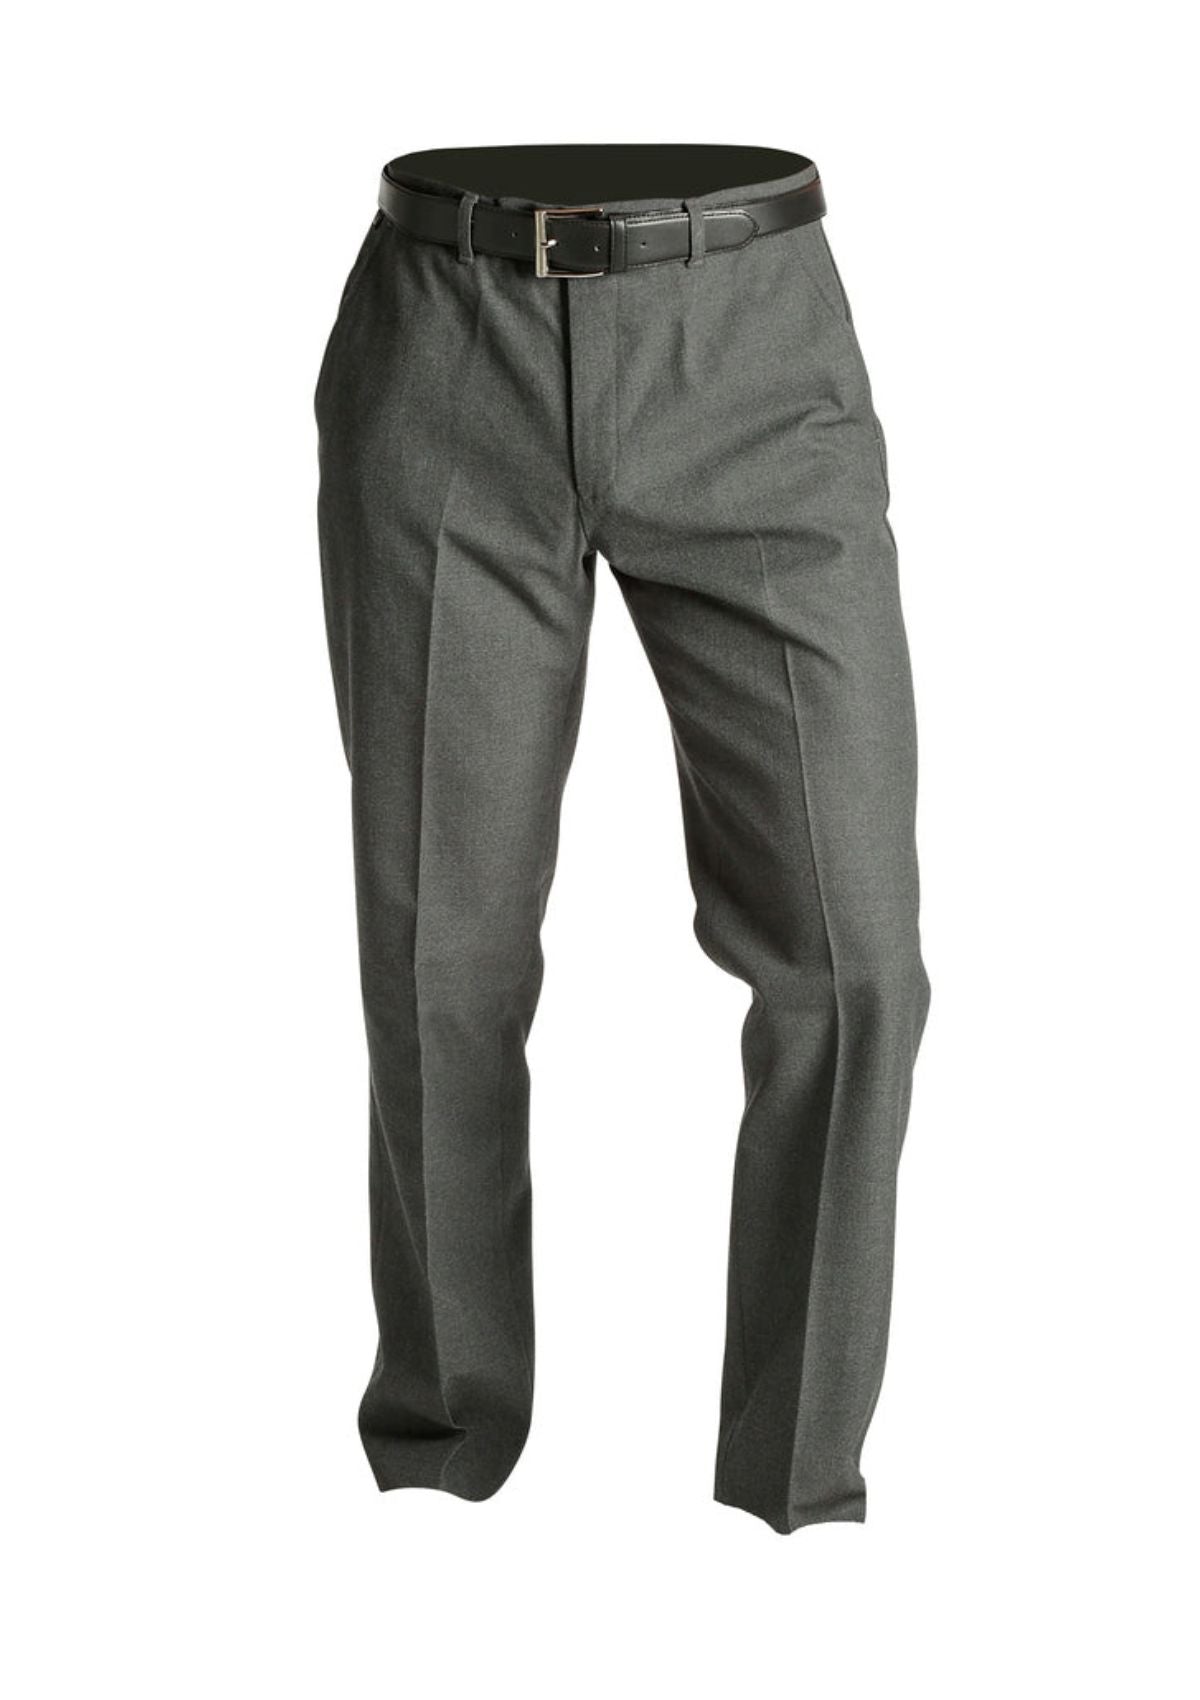 Virginian Senior Gents Slim Fit Trousers (Grey)